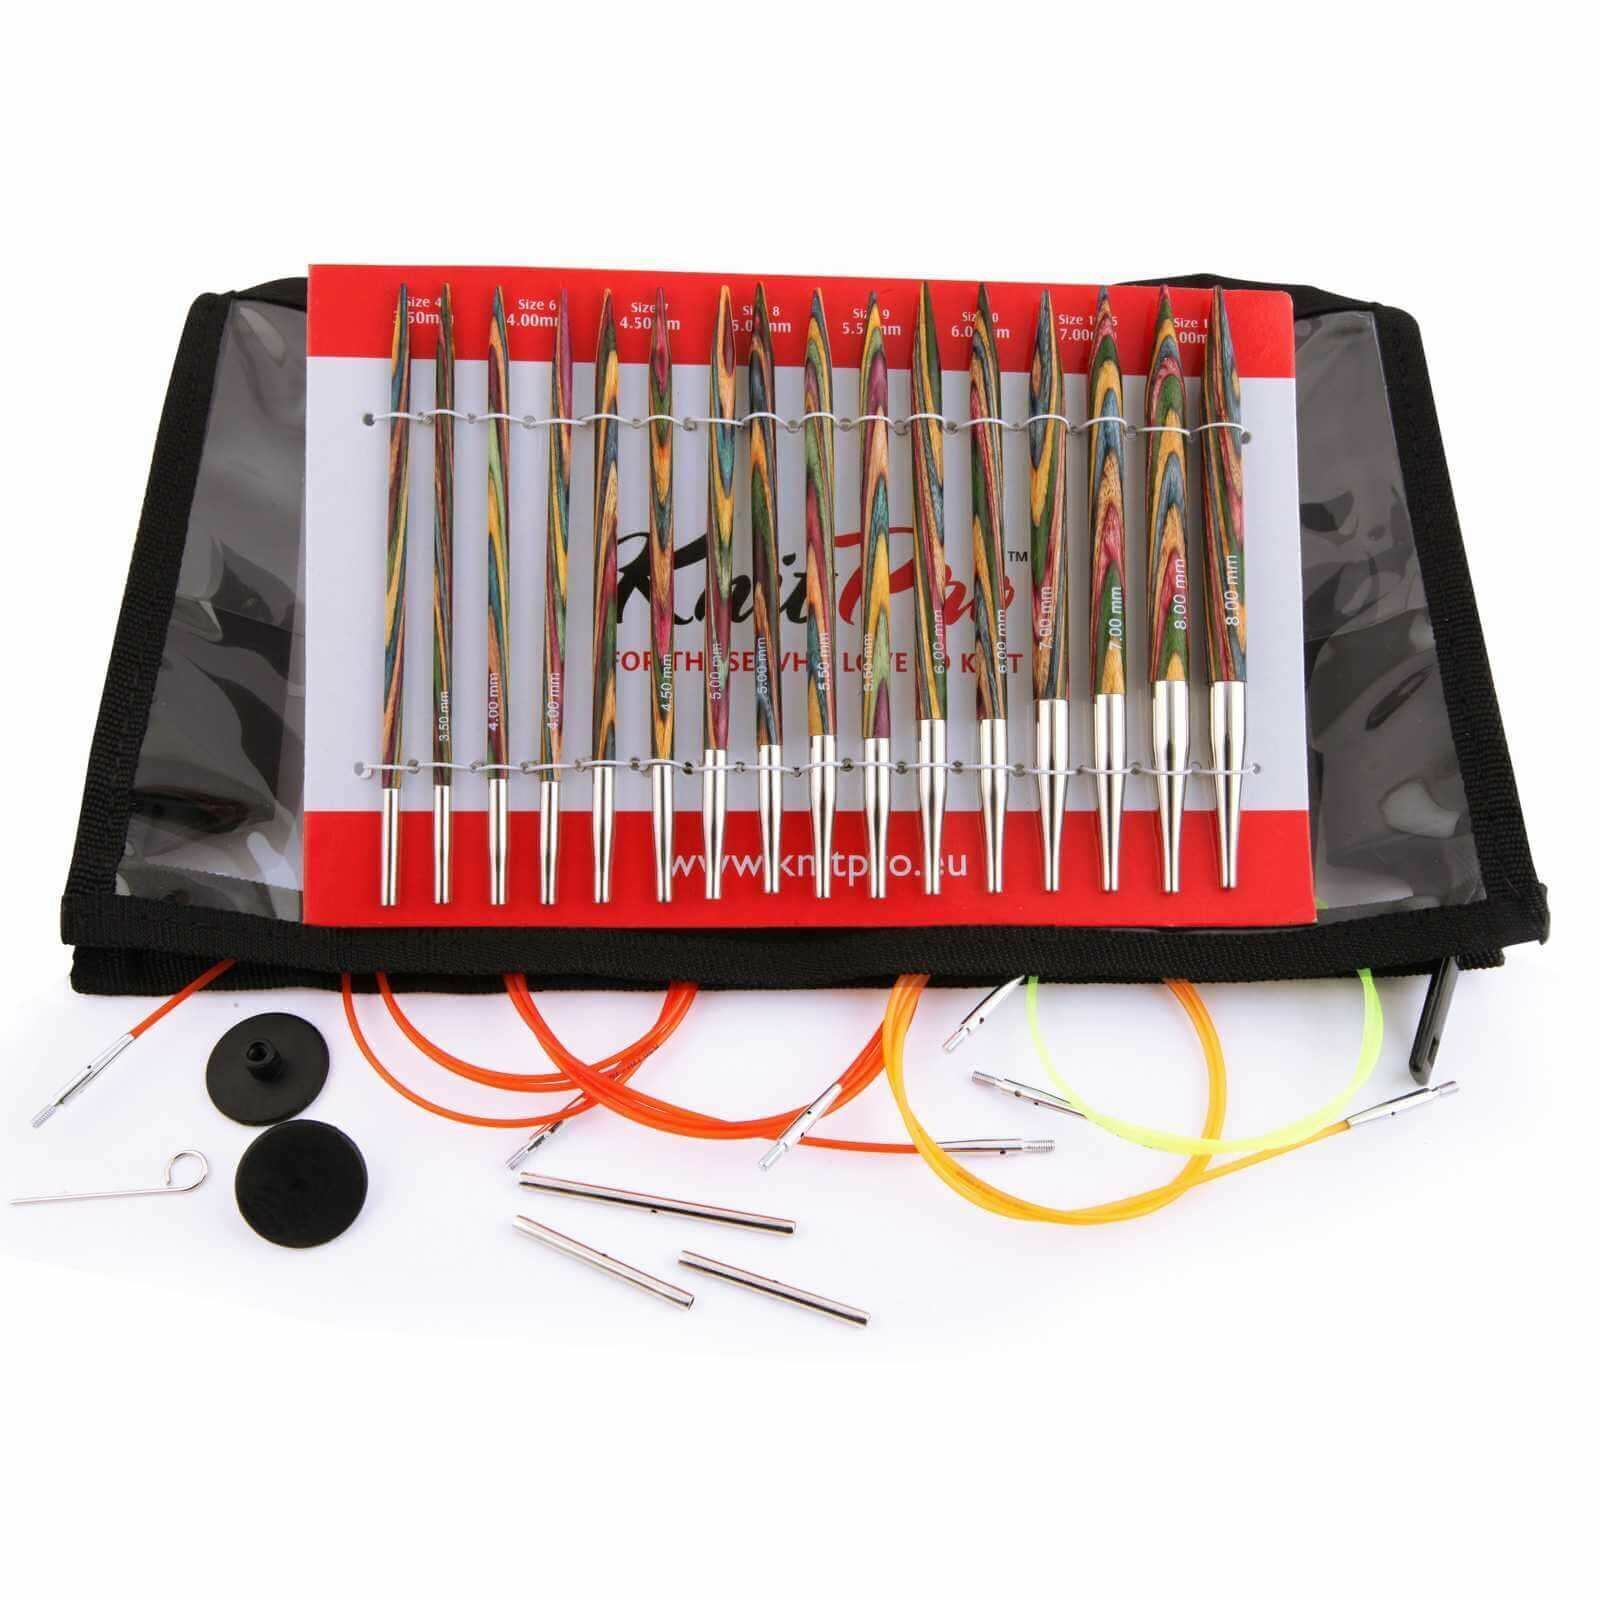 KnitPro Symfonie Deluxe Interchangeable Circular Knitting Needle Set | eBay